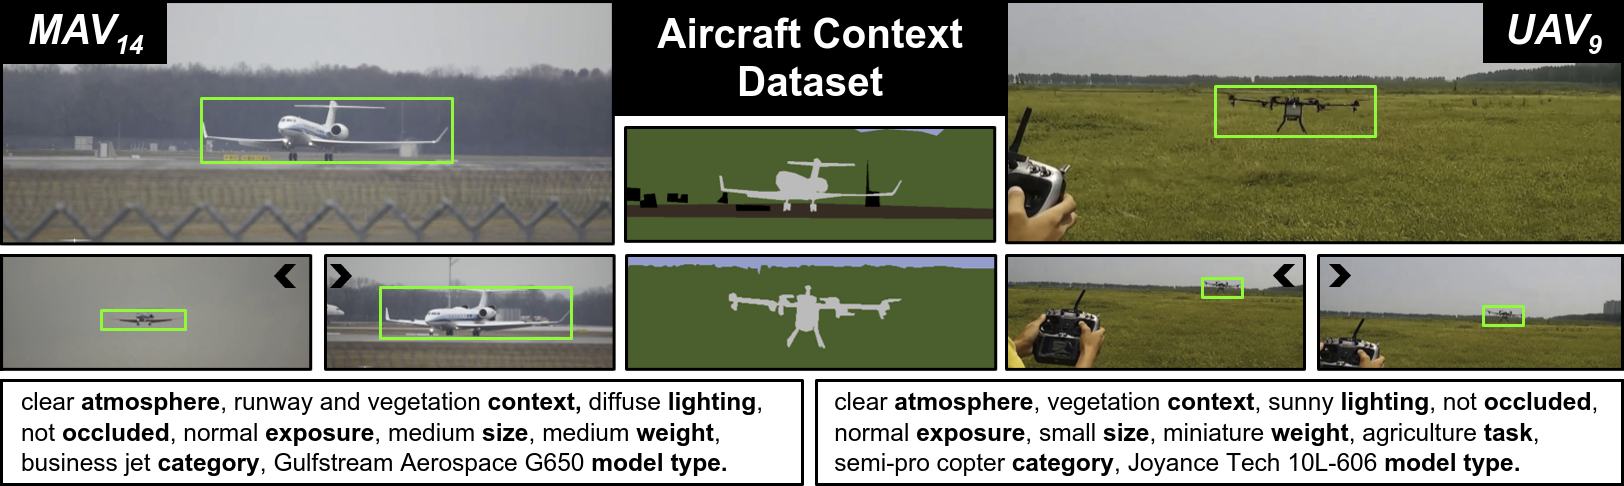 aircraft_context_dataset_overview.png